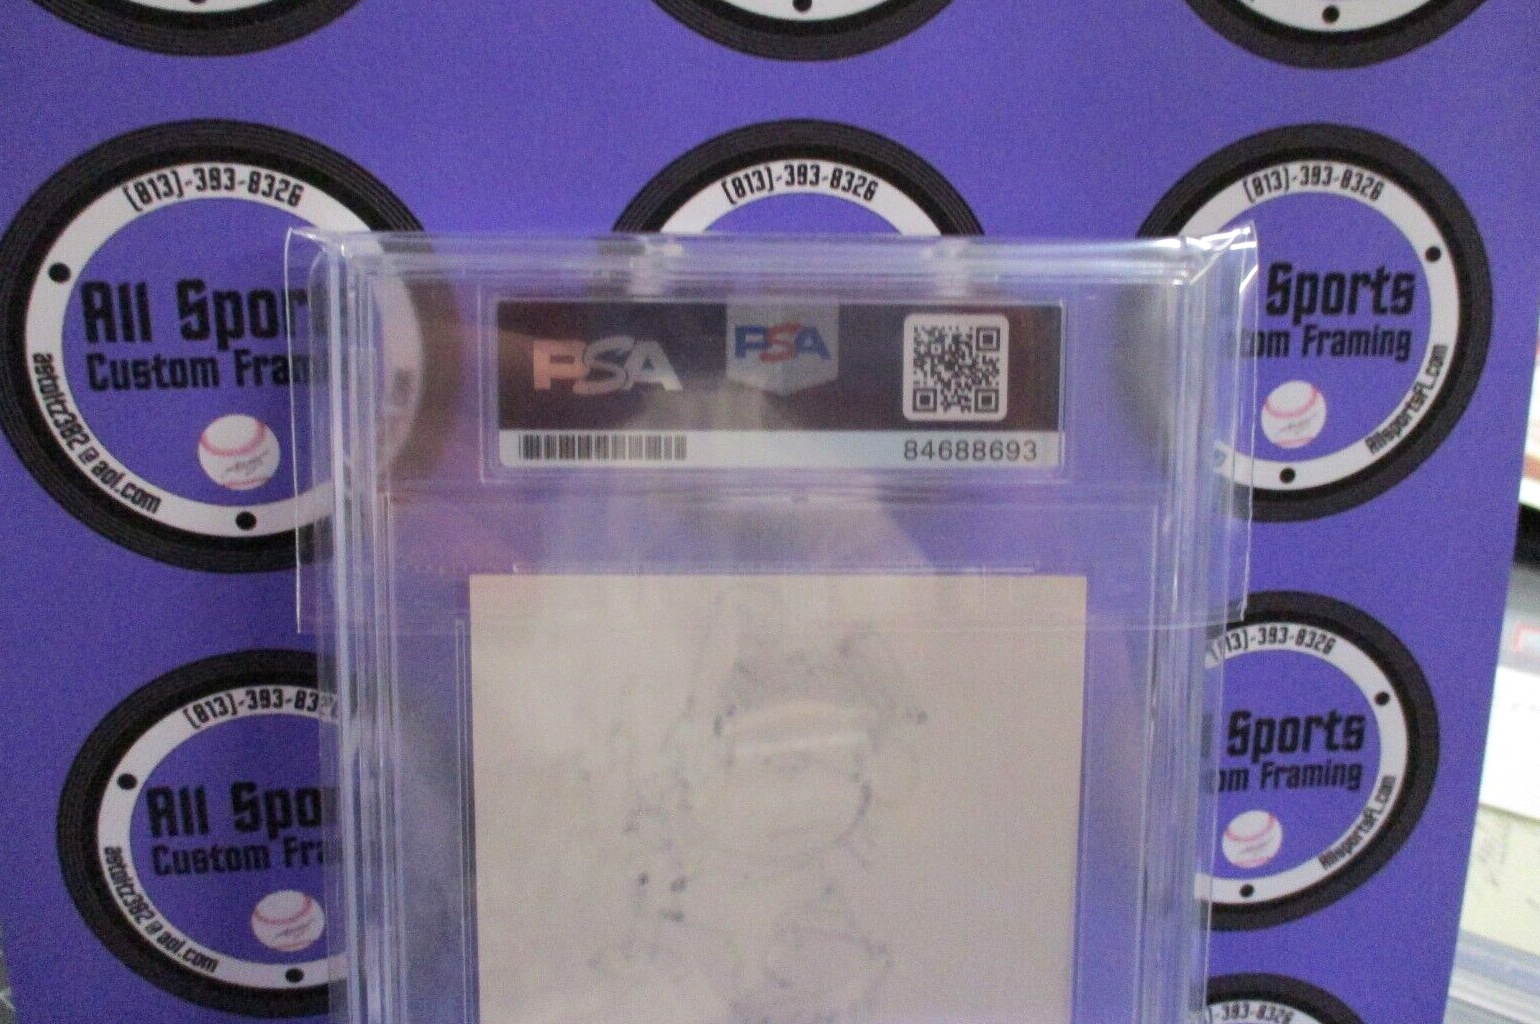 Bud Blake Autographed Index Card Signed PSA Certified #84688693 Tiger